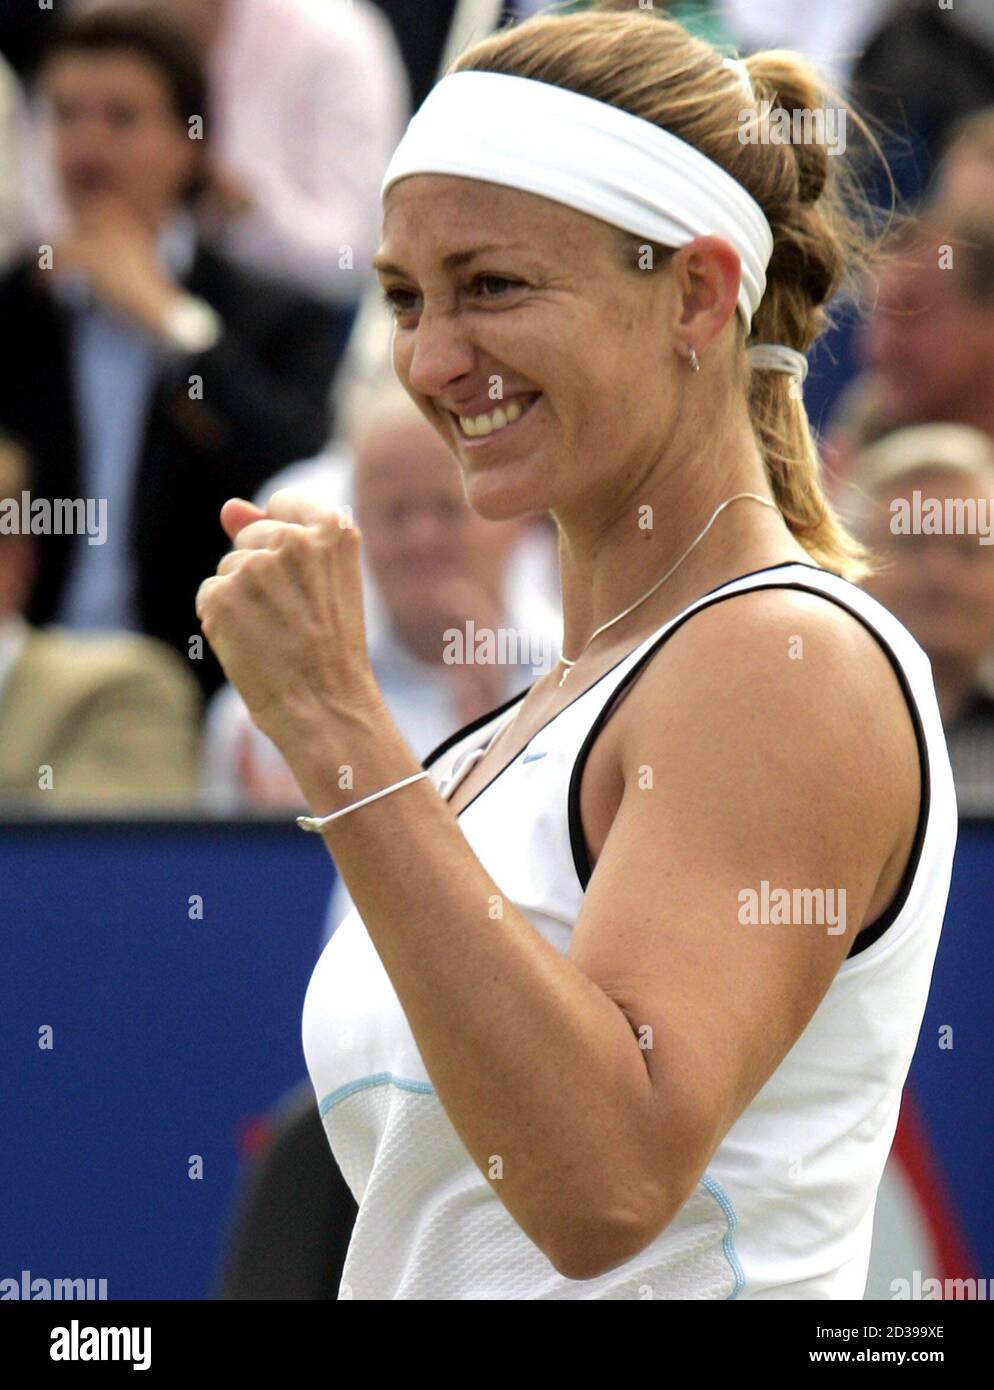 Ultieme Penetratie Caius Mary Pierce of France celebrates her victory over Klara Koukalova of the  Czech Republic in the women's final of the Ordina Tennis Open in Den Bosch,  the Netherlands, June 19, 2004. Pierce